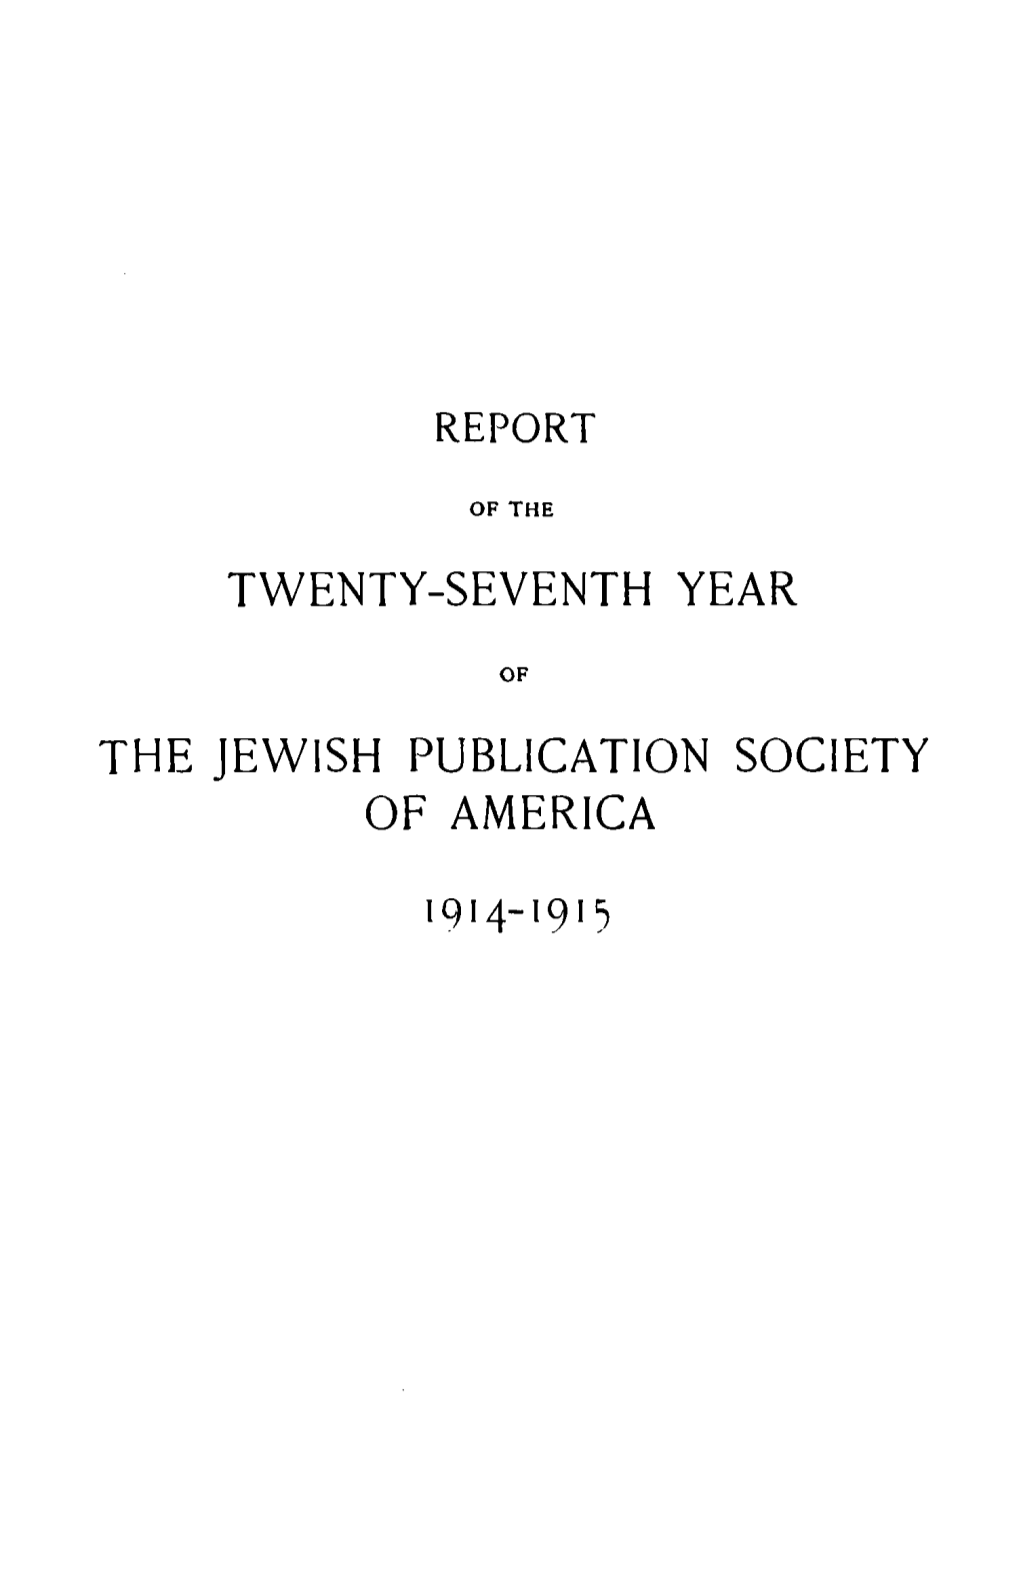 Twenty-Seventh Year the Jewish Publication Society of America